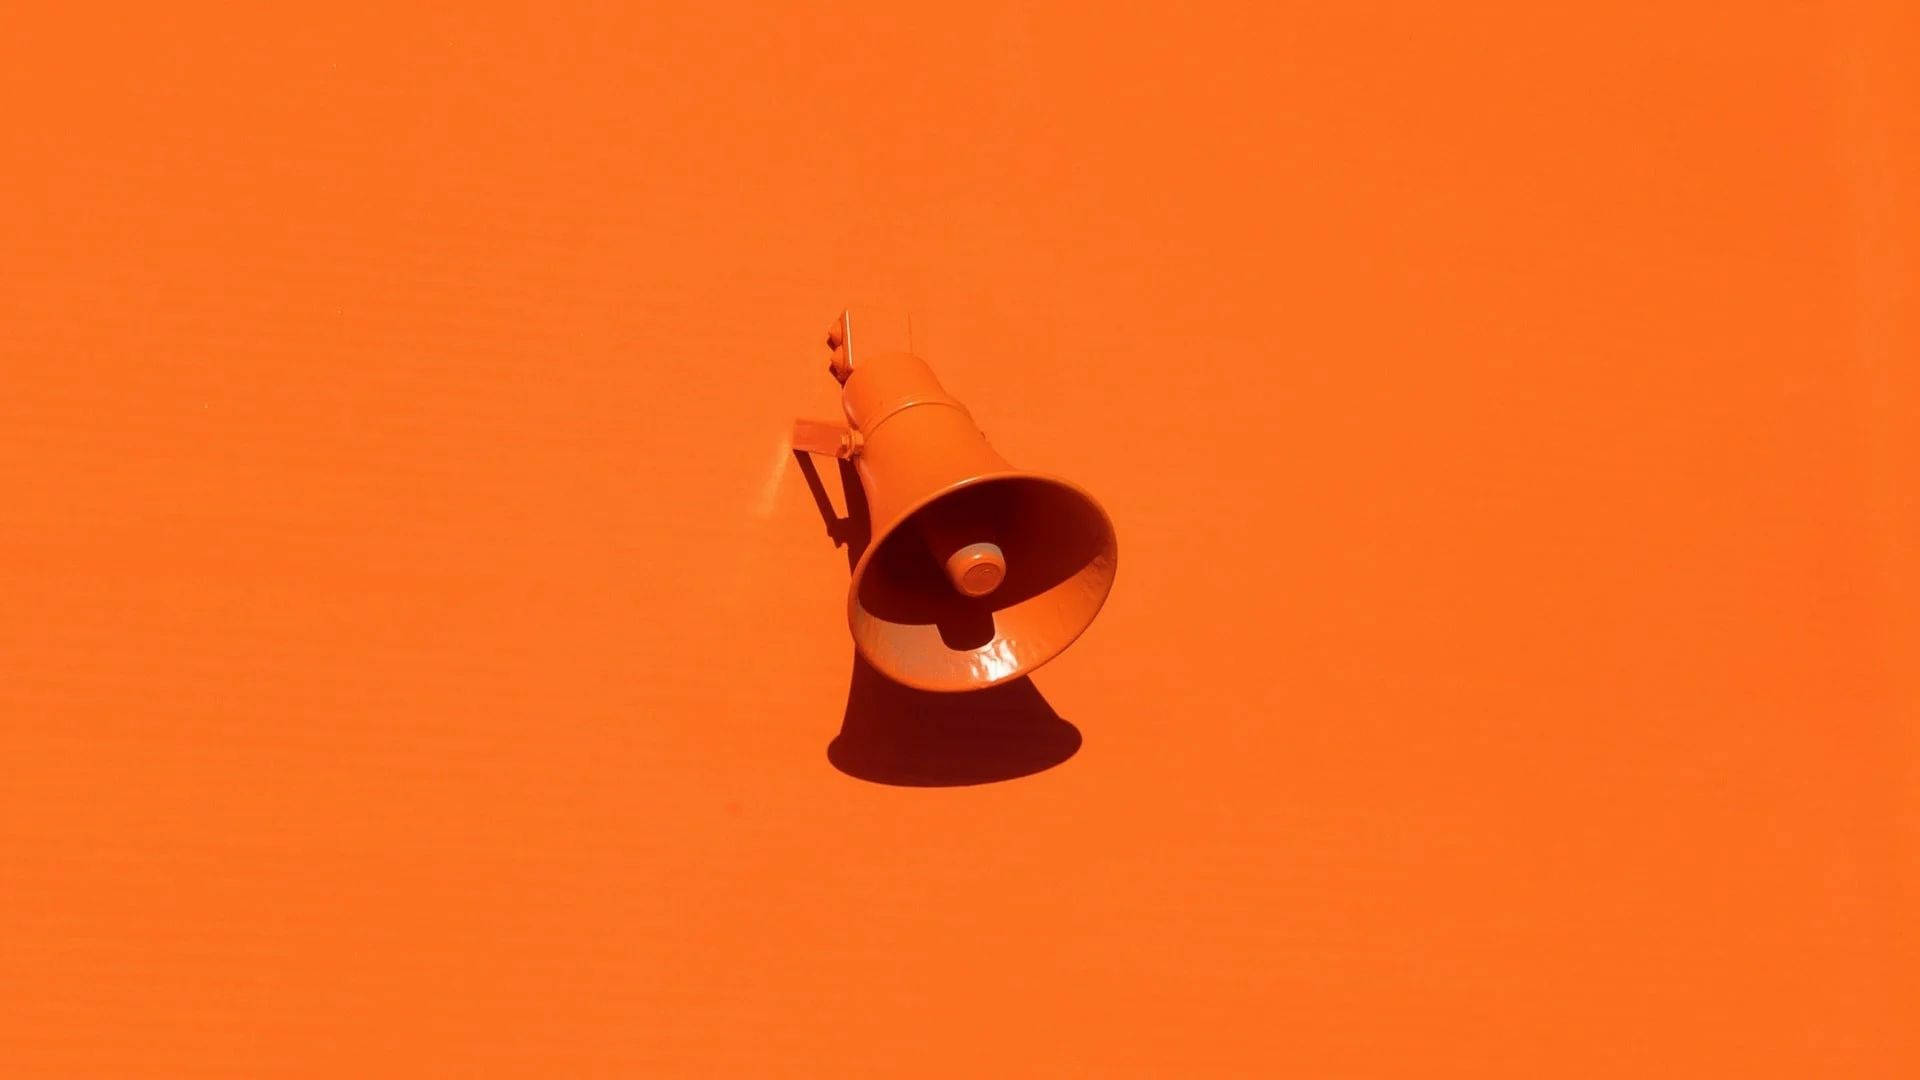 Megaphone On Orange Background Wallpaper